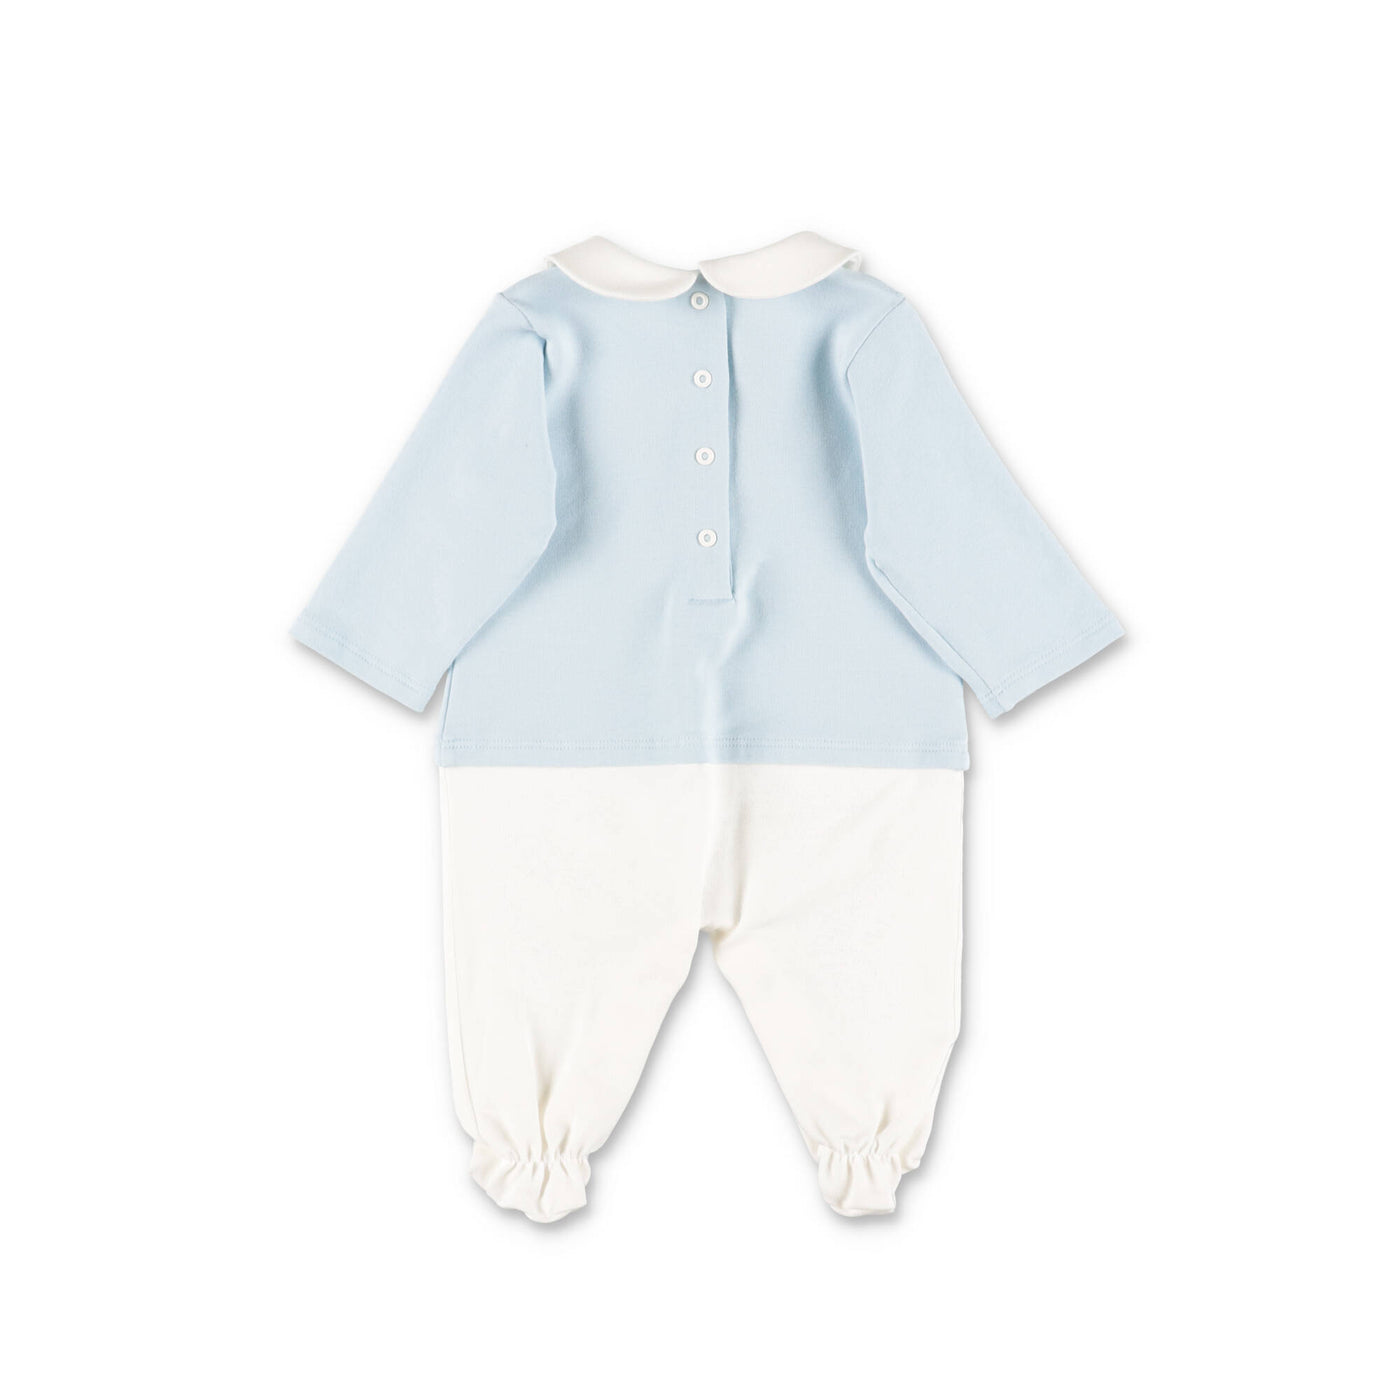 Light blue contrasting panels cotton jersey baby boy FENDI set with romper hat and bib | Carofiglio Junior